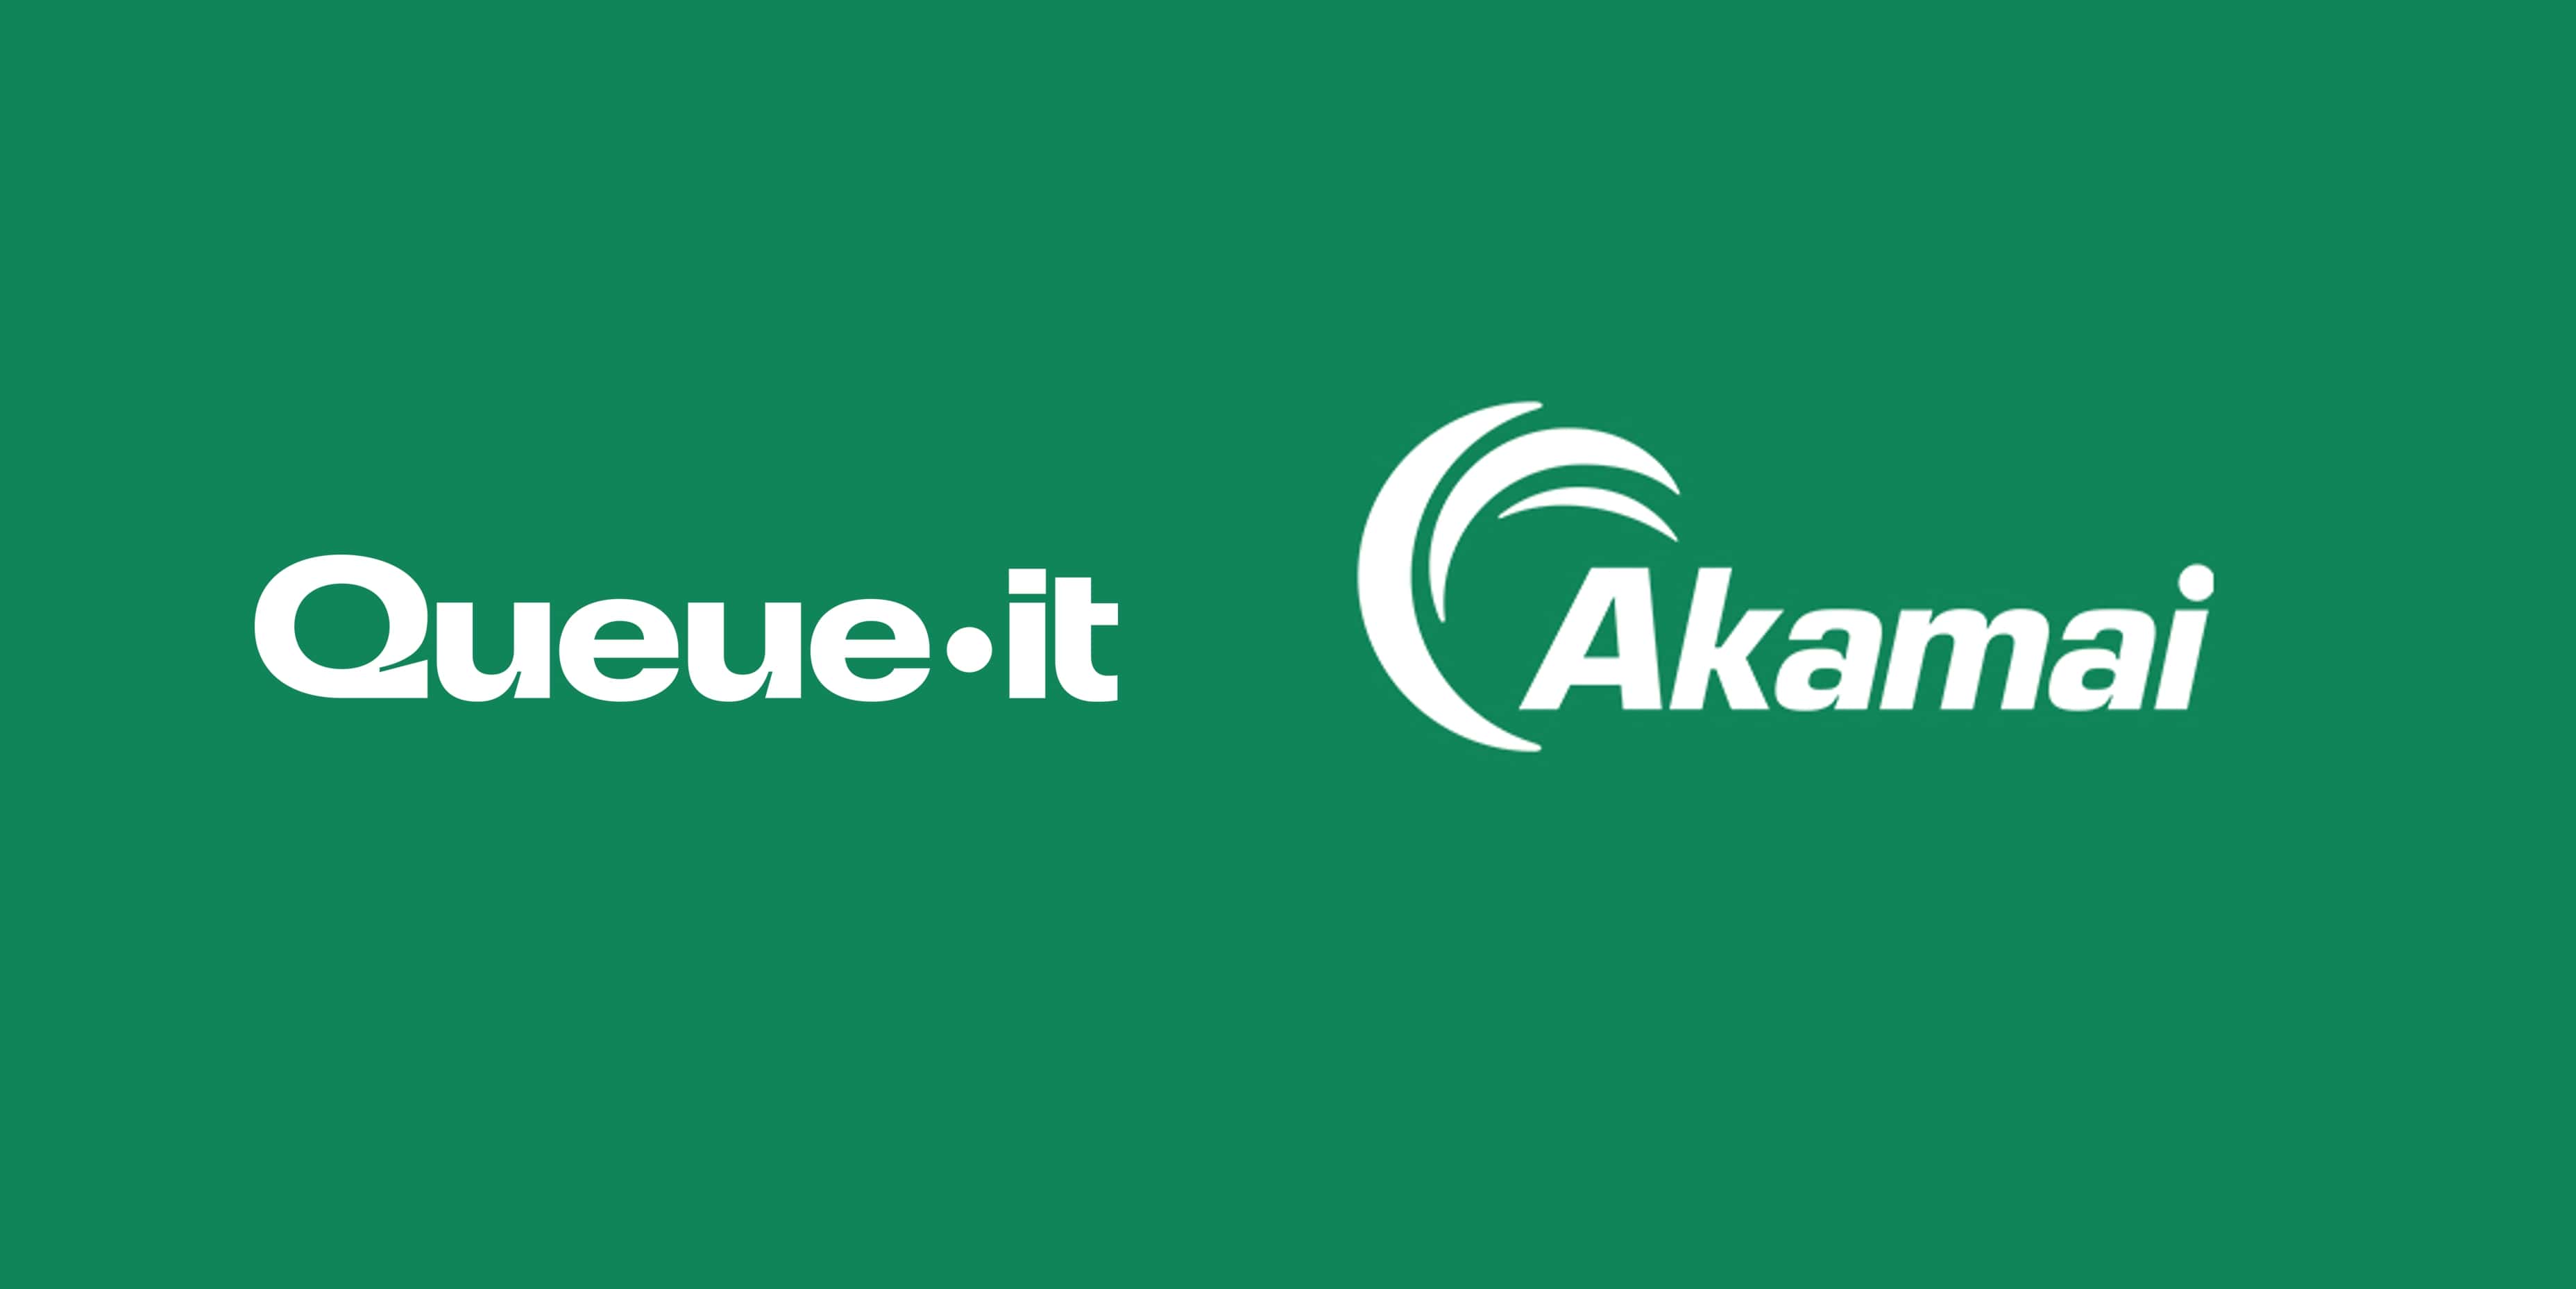 queue-it akamai logos